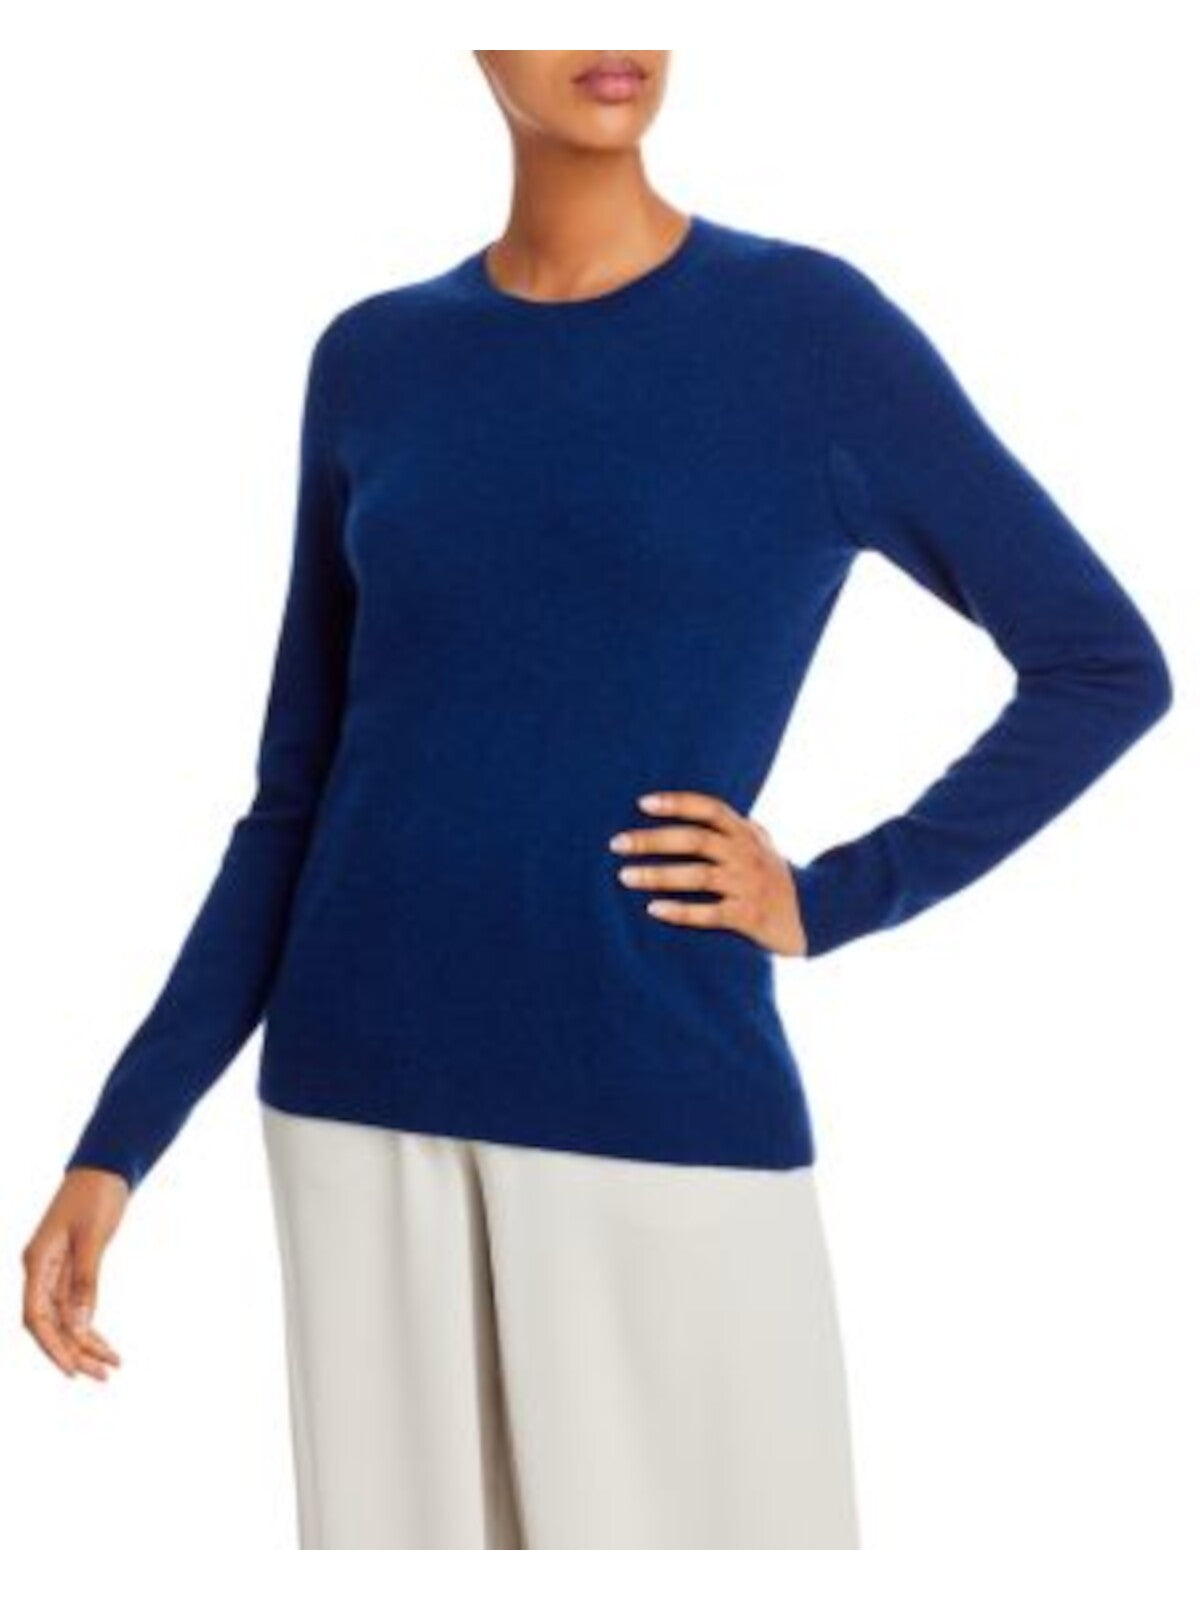 Designer Brand Womens Navy Ribbed Long Sleeve Jewel Neck Sweater M